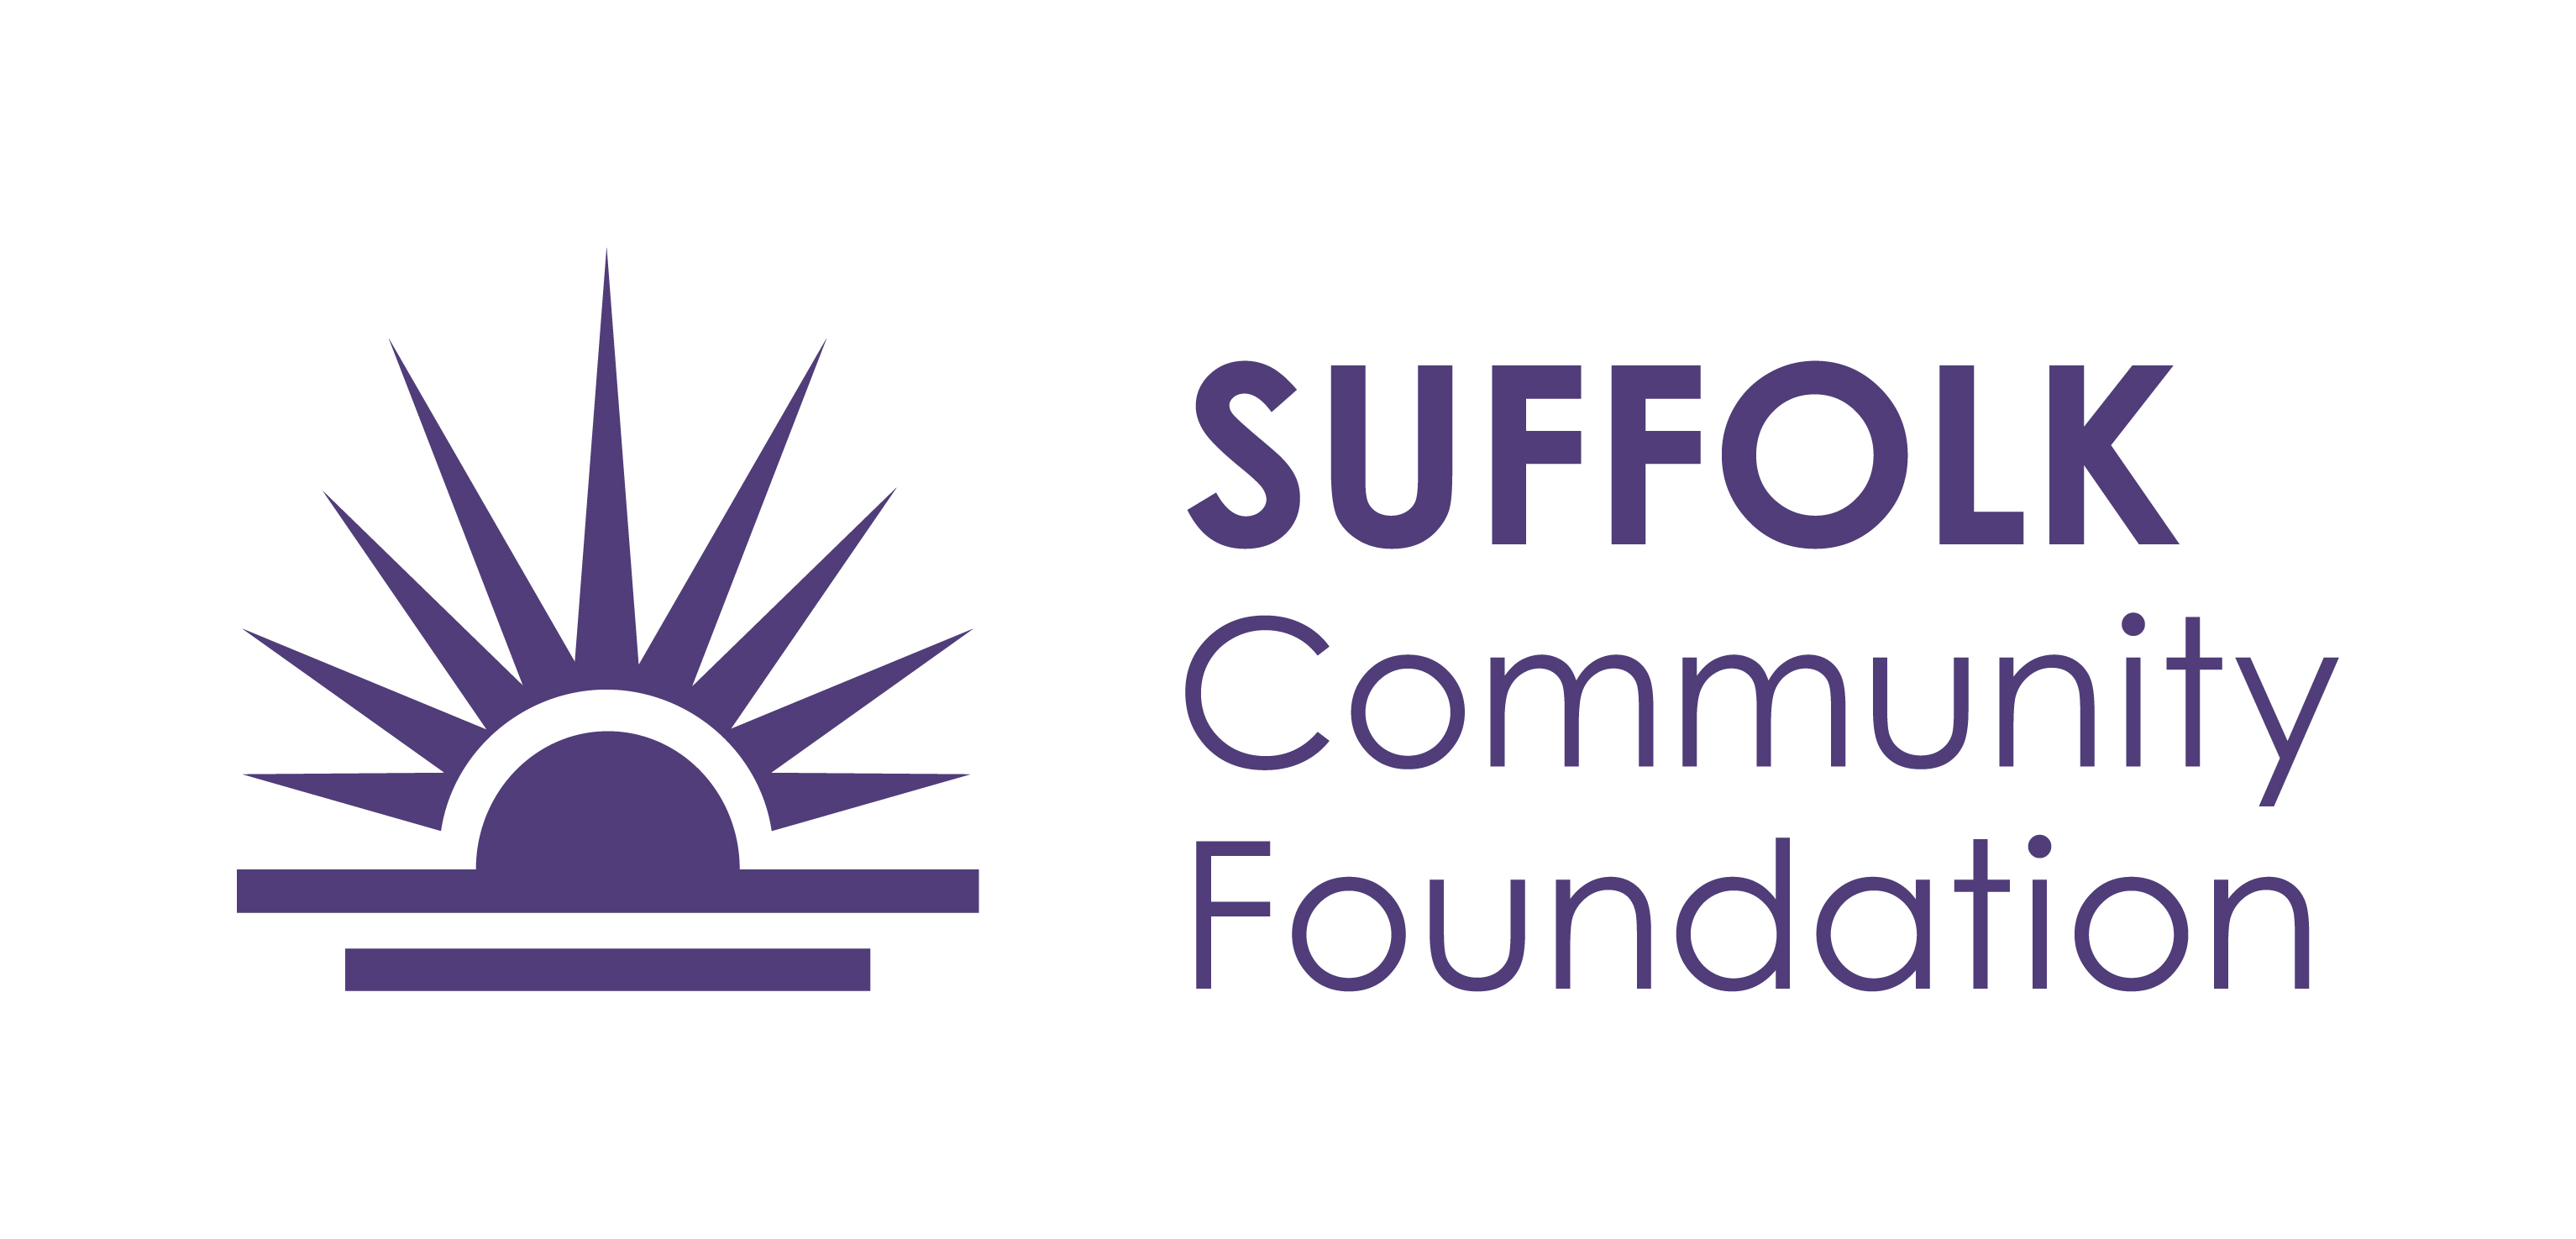 Suffolk Community Foundation funding